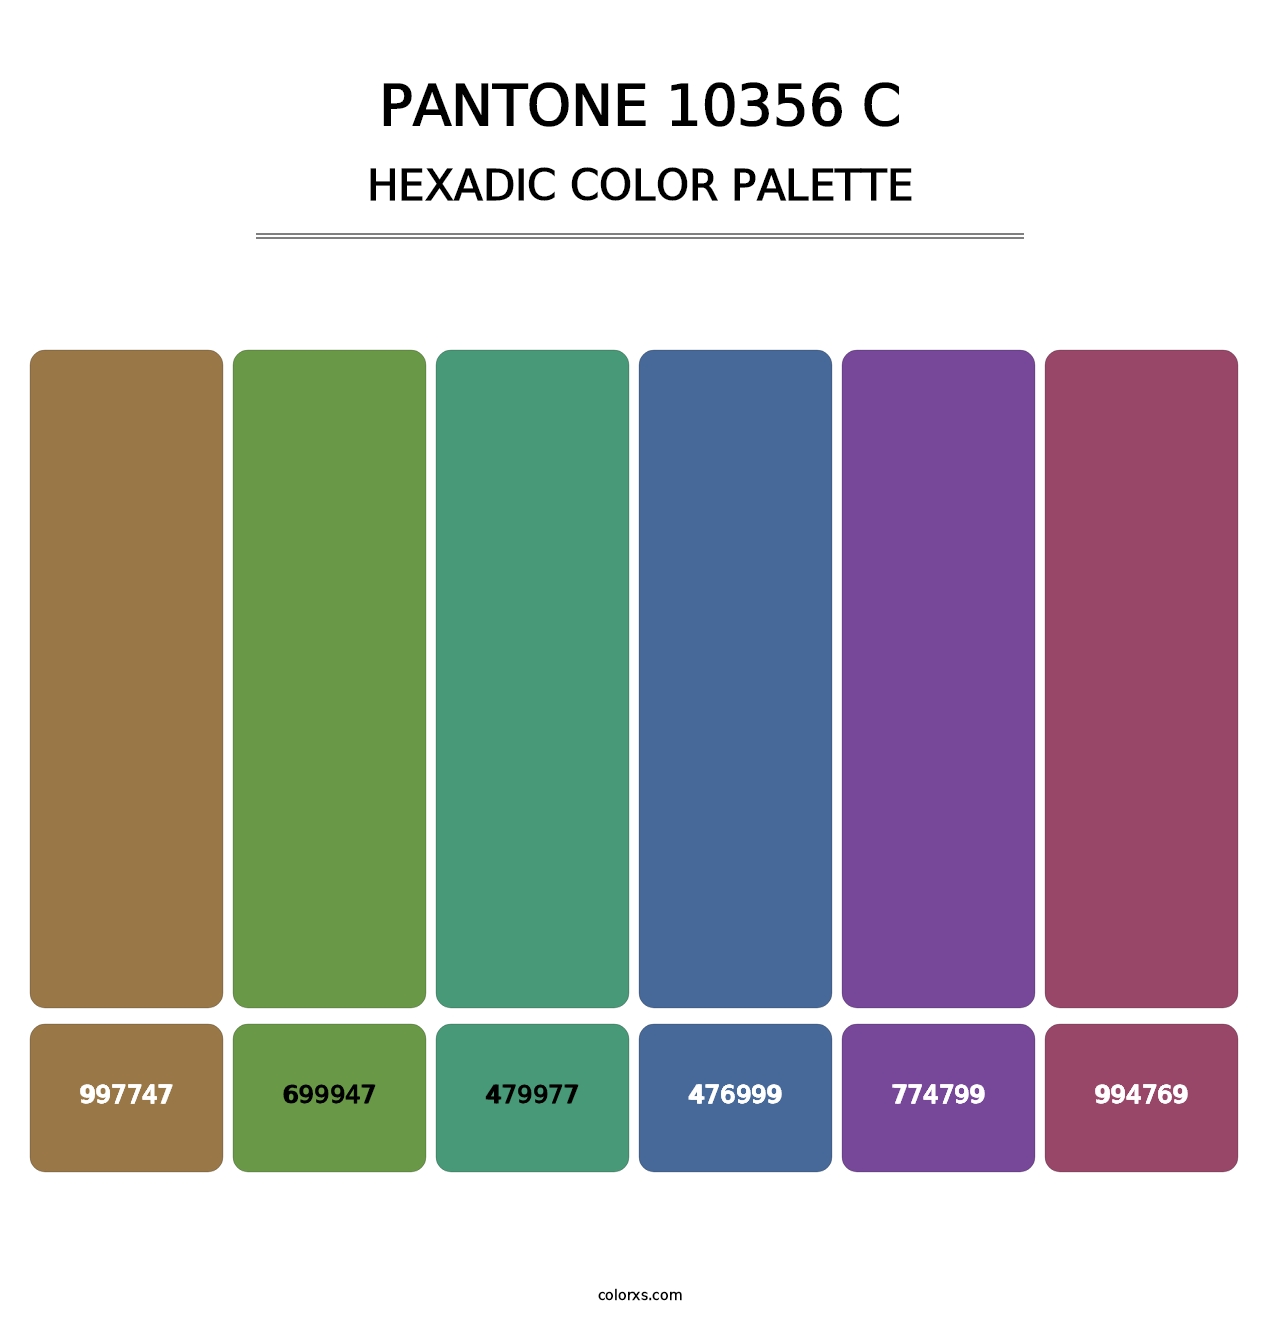 PANTONE 10356 C - Hexadic Color Palette